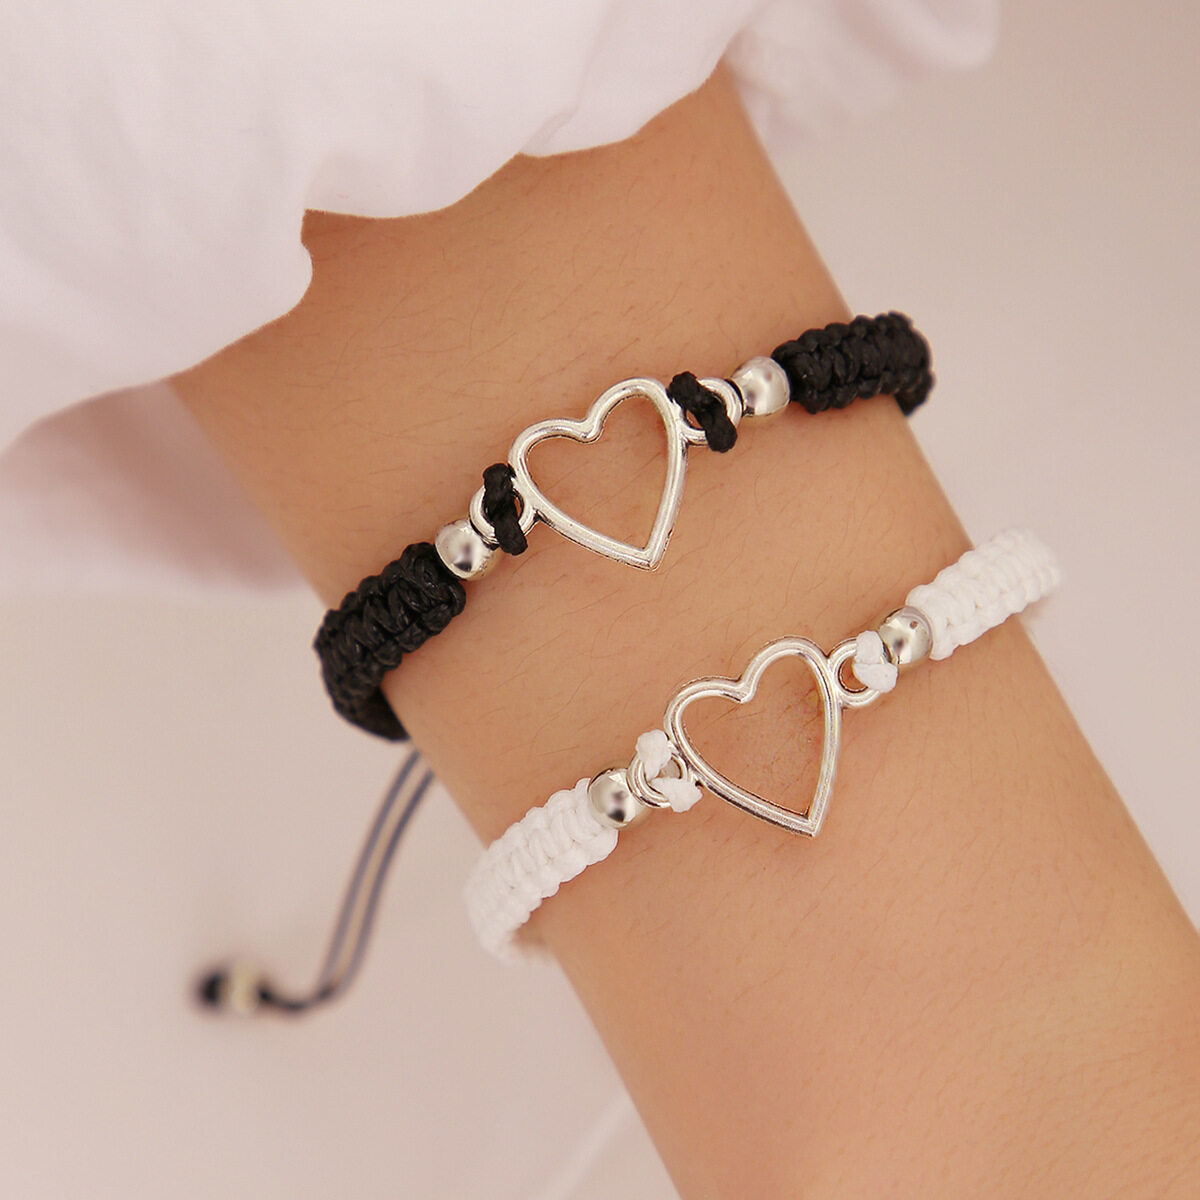 48 Pieces Heart Matching Bracelets for Friend Heart String Bracelet Heart Friendship Bracelets Matching Bracelets for Couples Black Adjustable